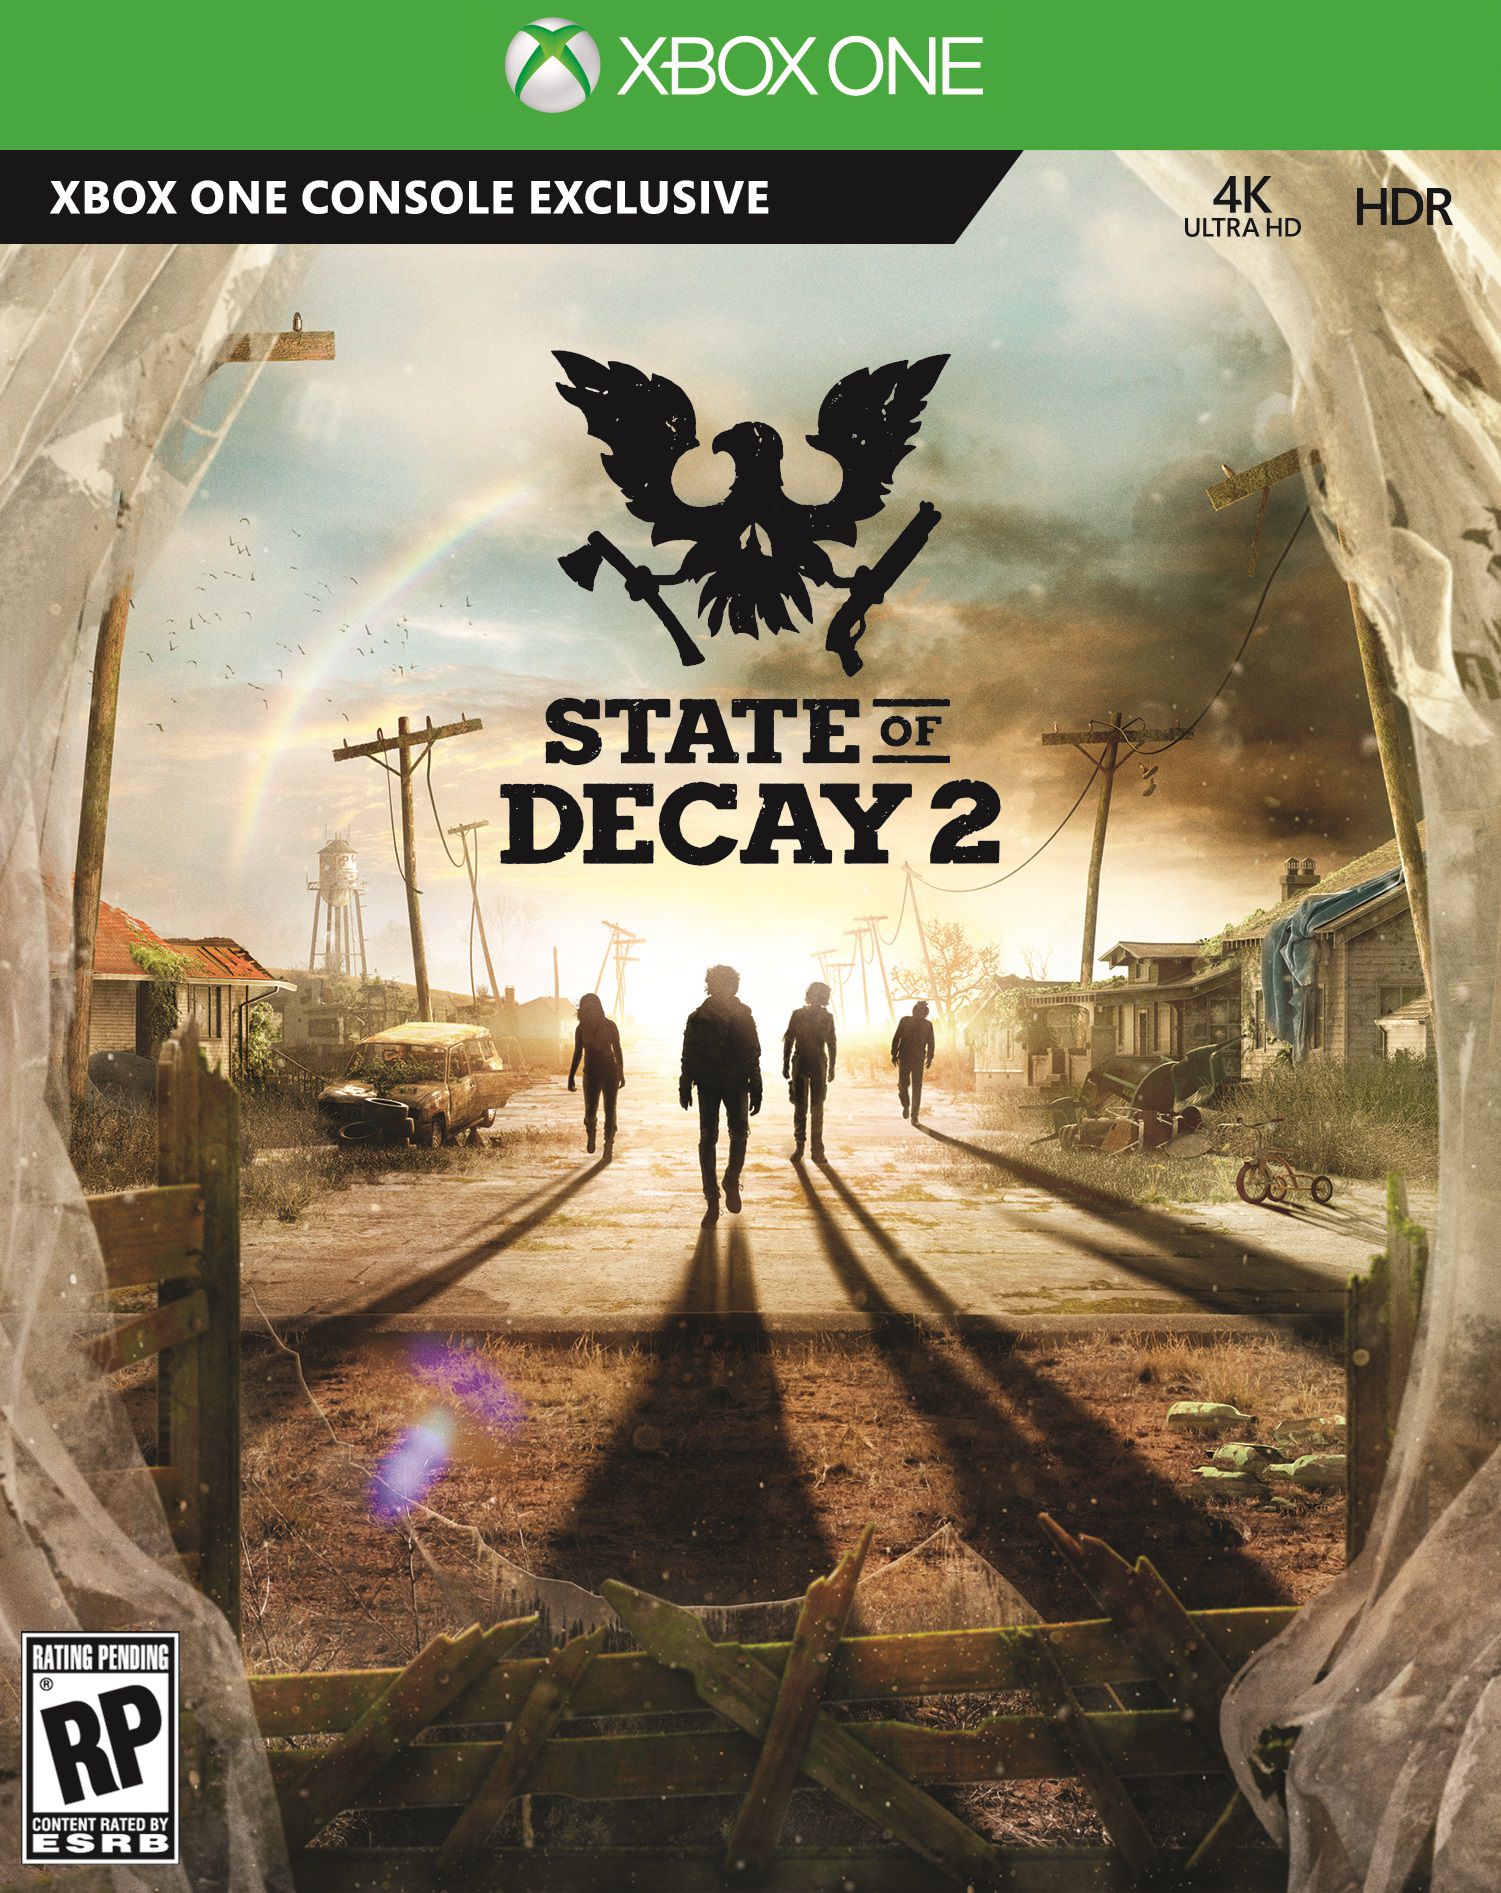 State of Decay: Como o jogo do Xbox se diferencia de outros games de zumbi